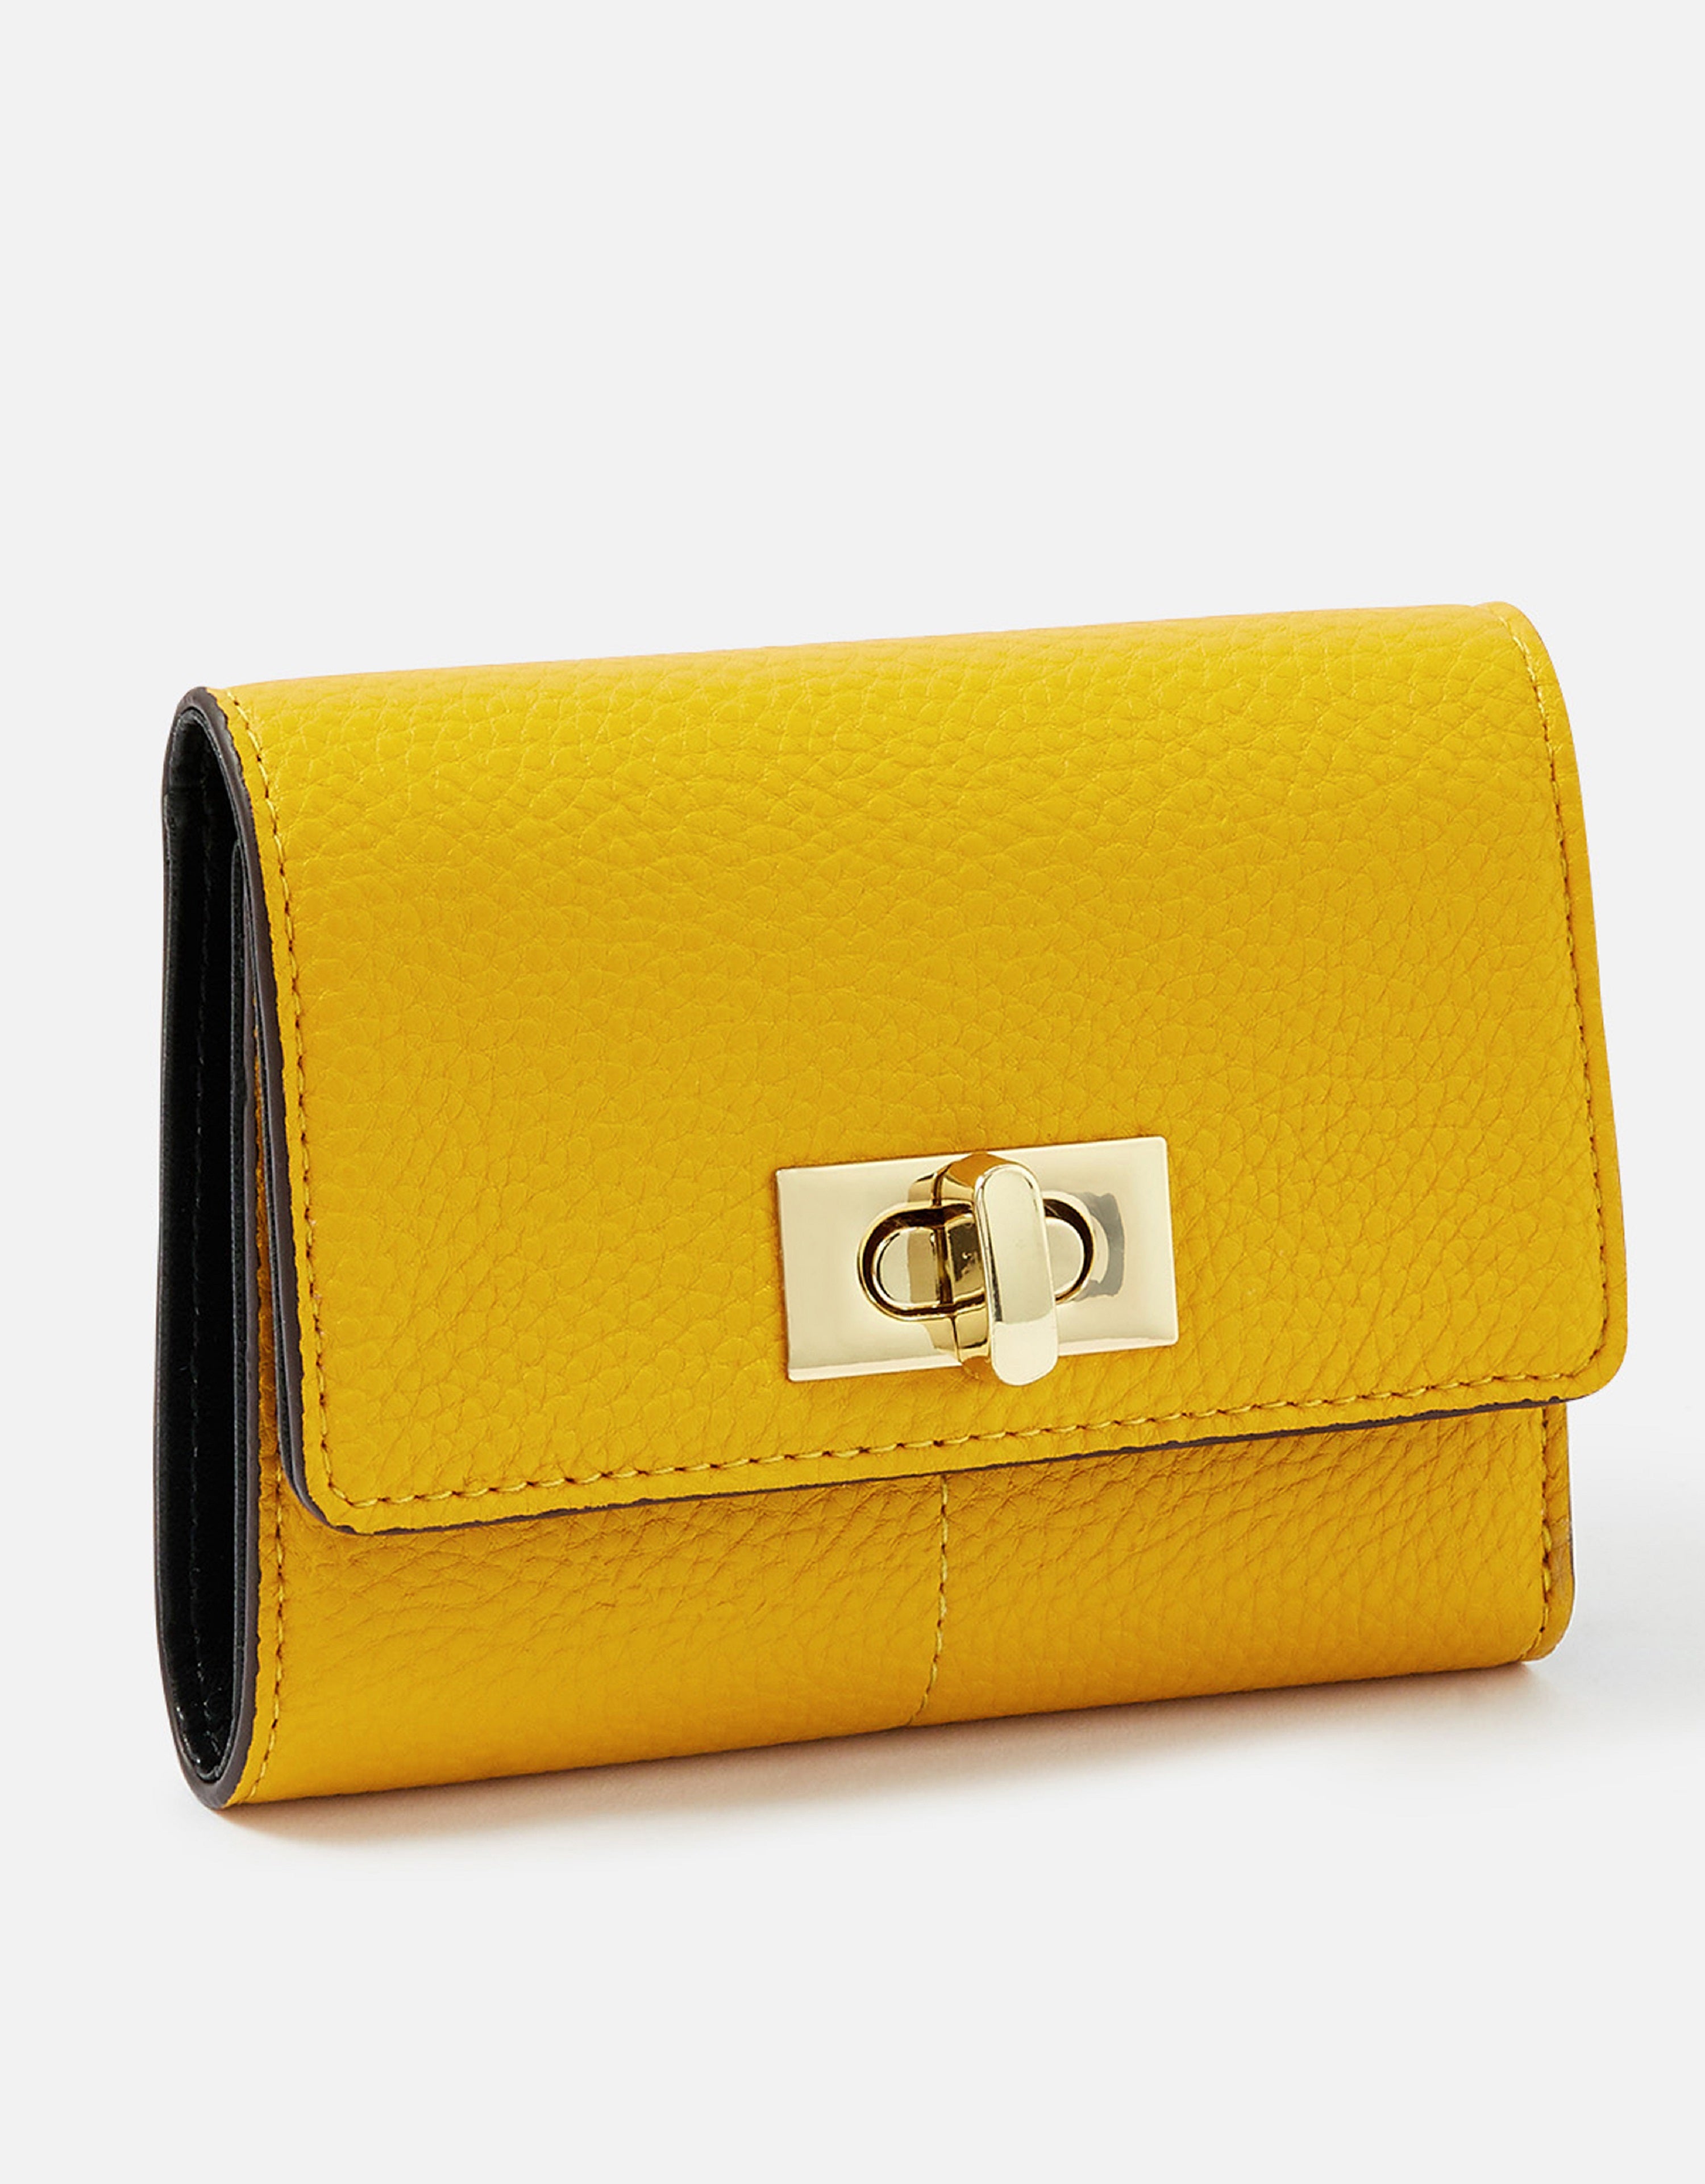 phone wallet: Handbags | Dillard's